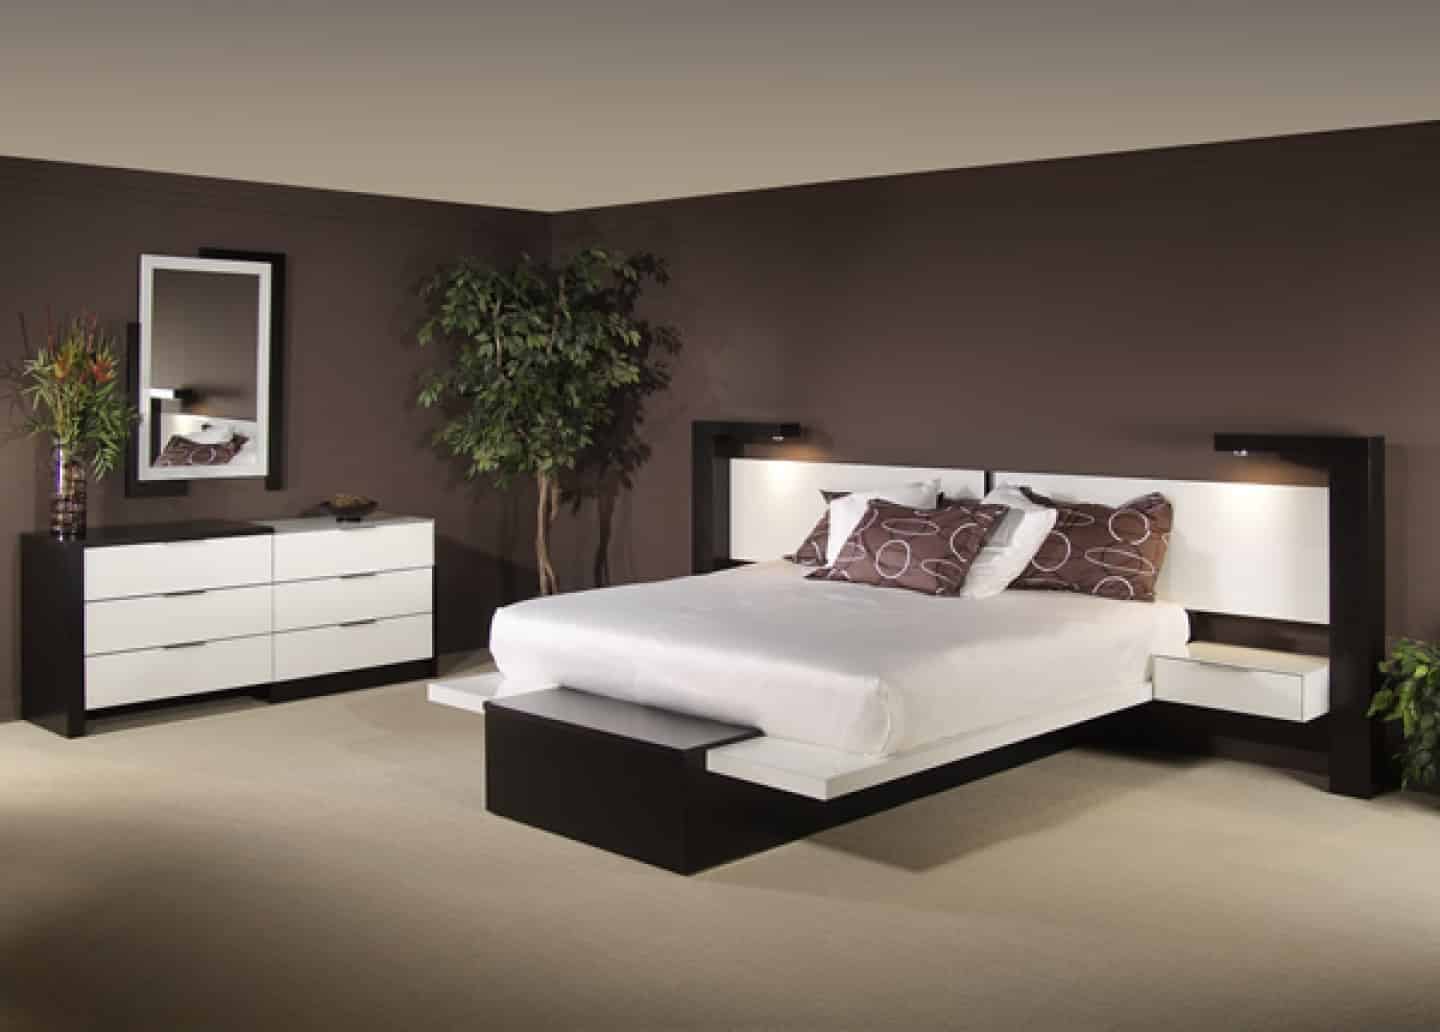 How To Choose The Best Bedroom Furniture Design?